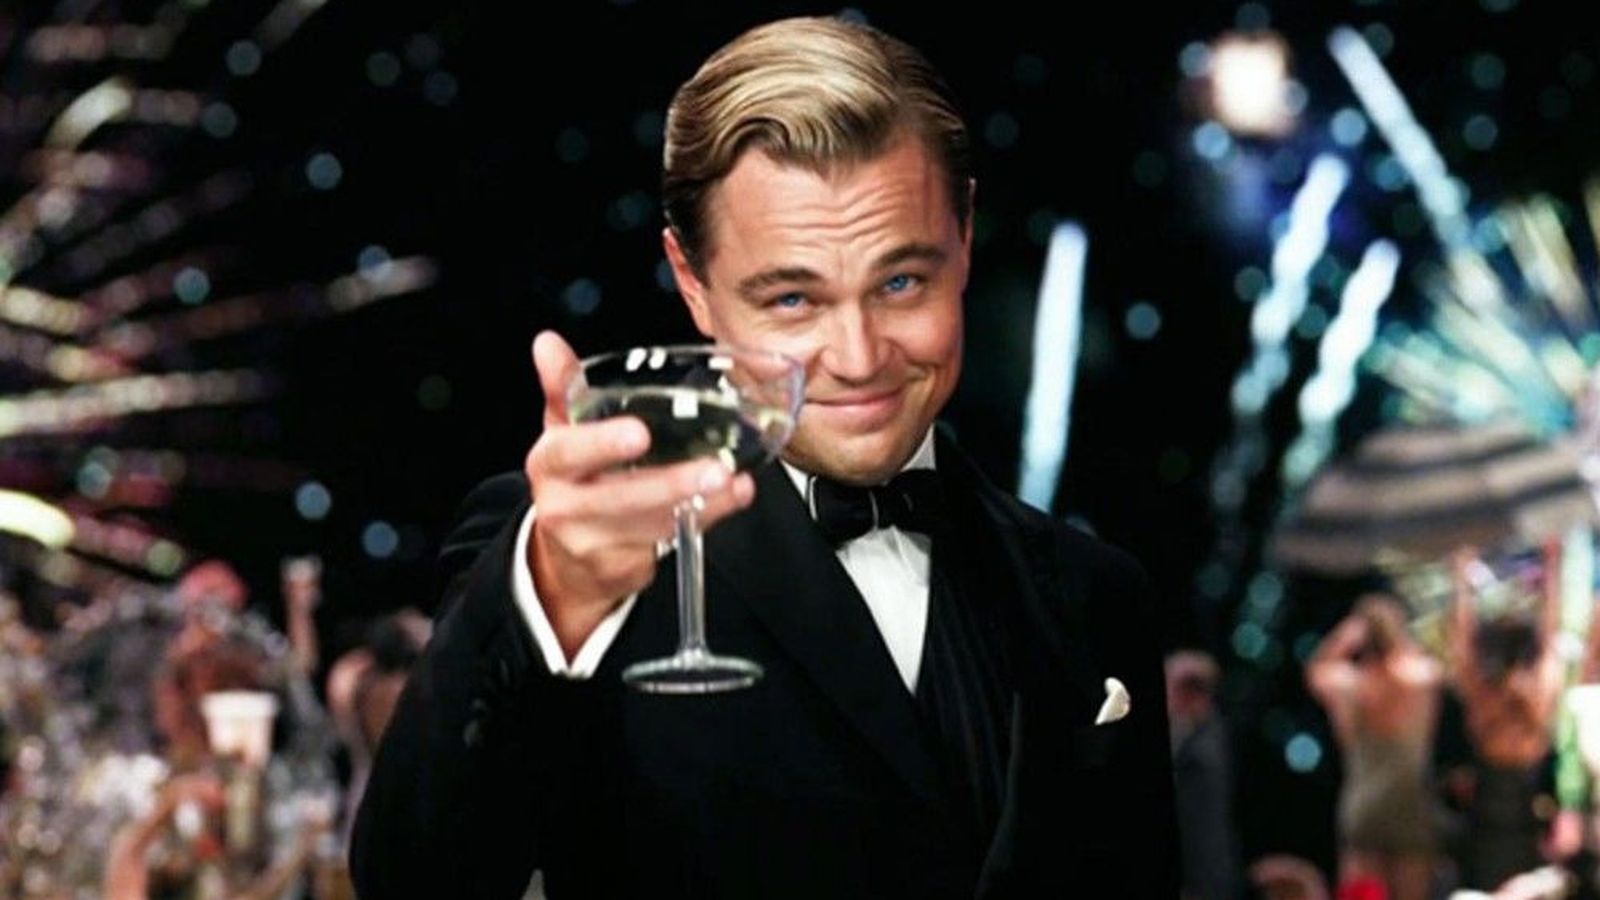 Foto: Foto del actor Leonardo Di Caprio sujetando una copa de champán.